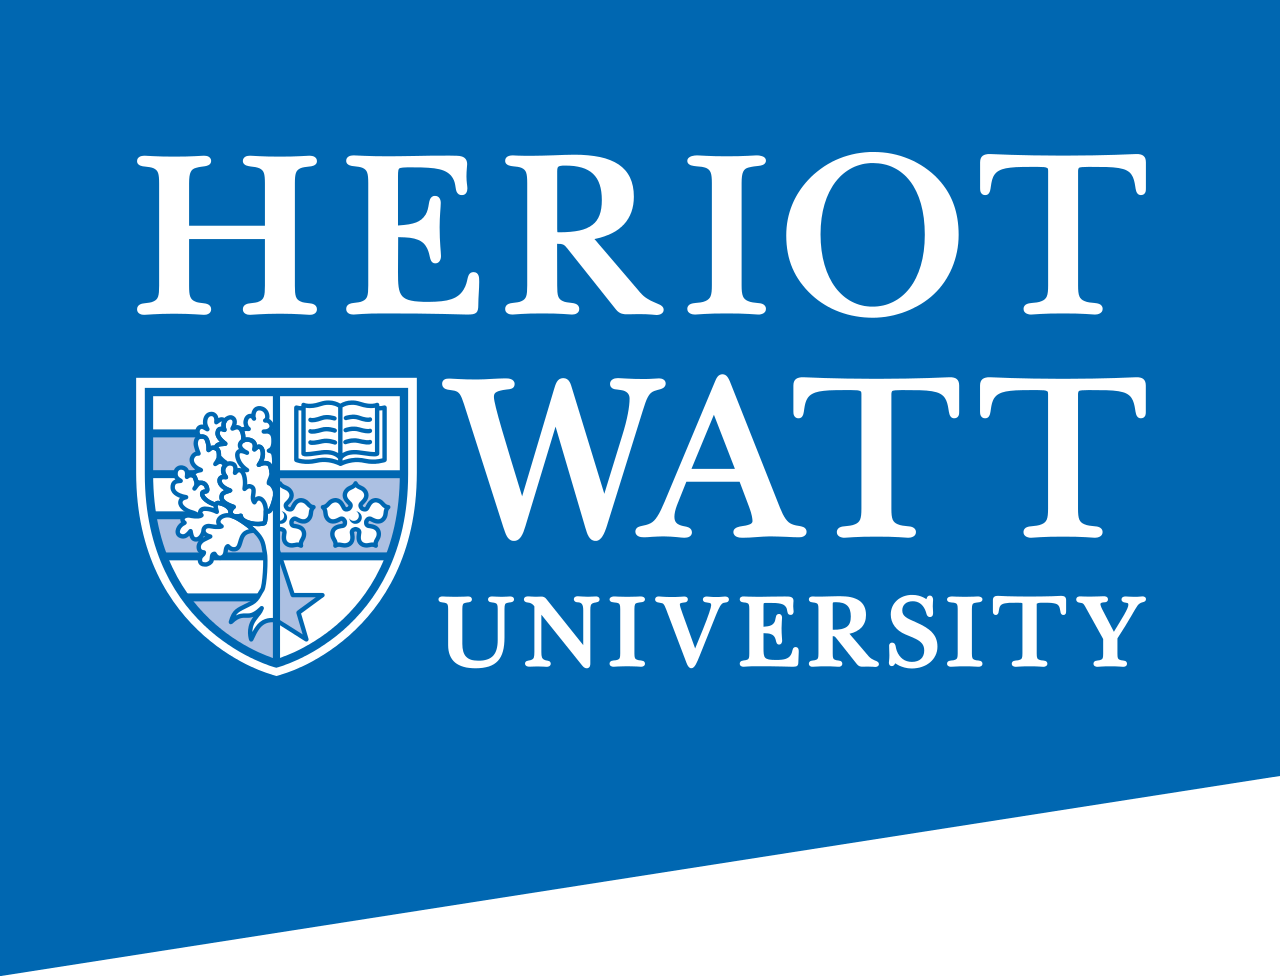 phd scholarship heriot watt university